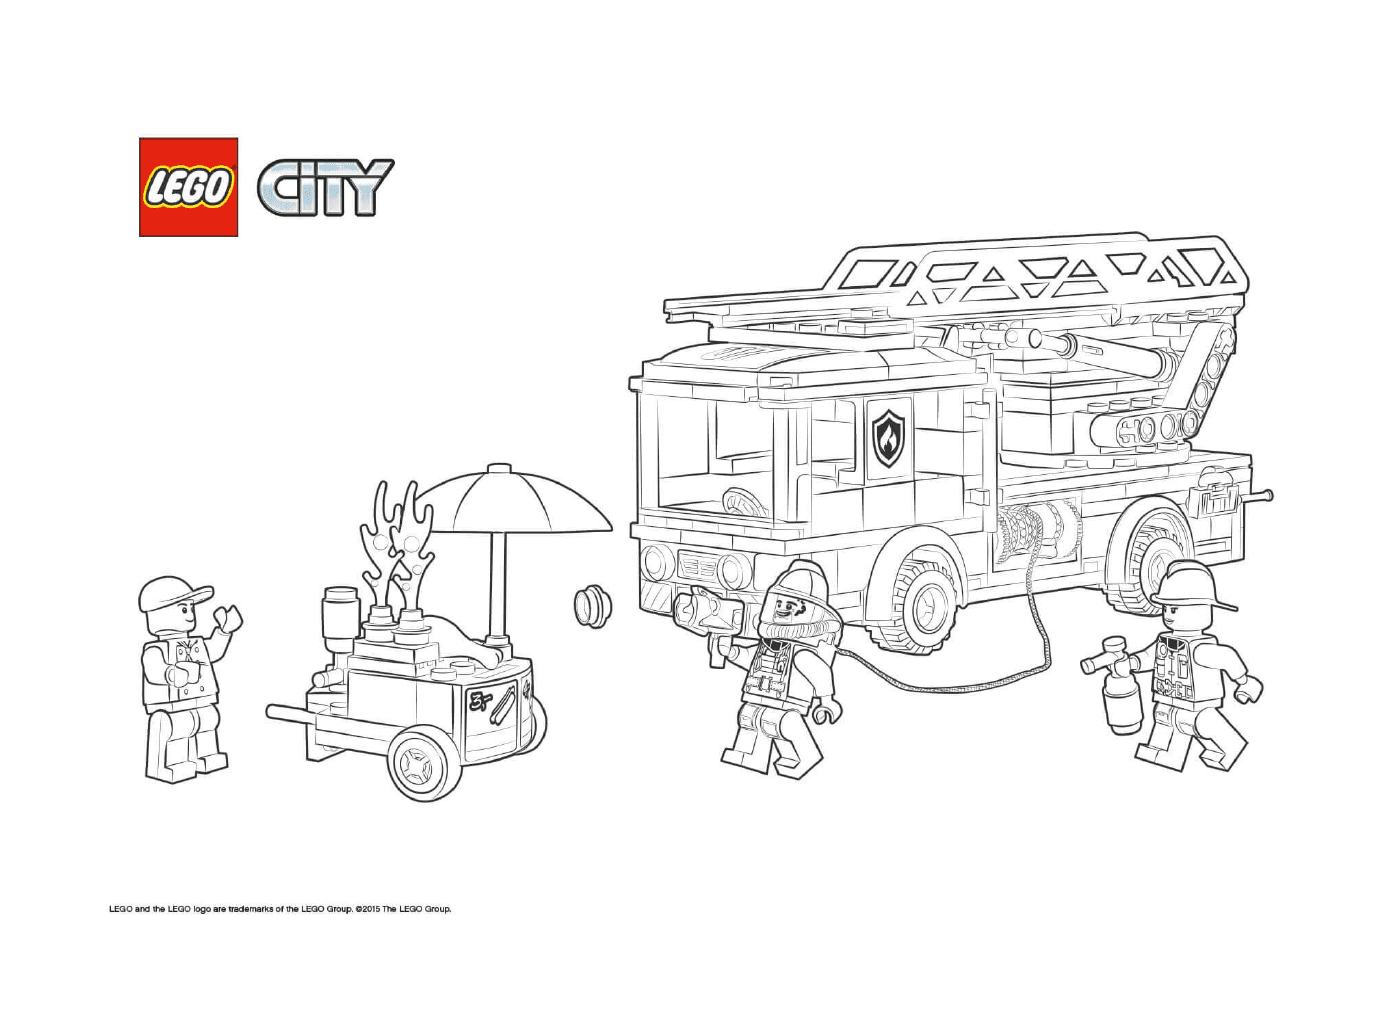  Lego City Fire Department 